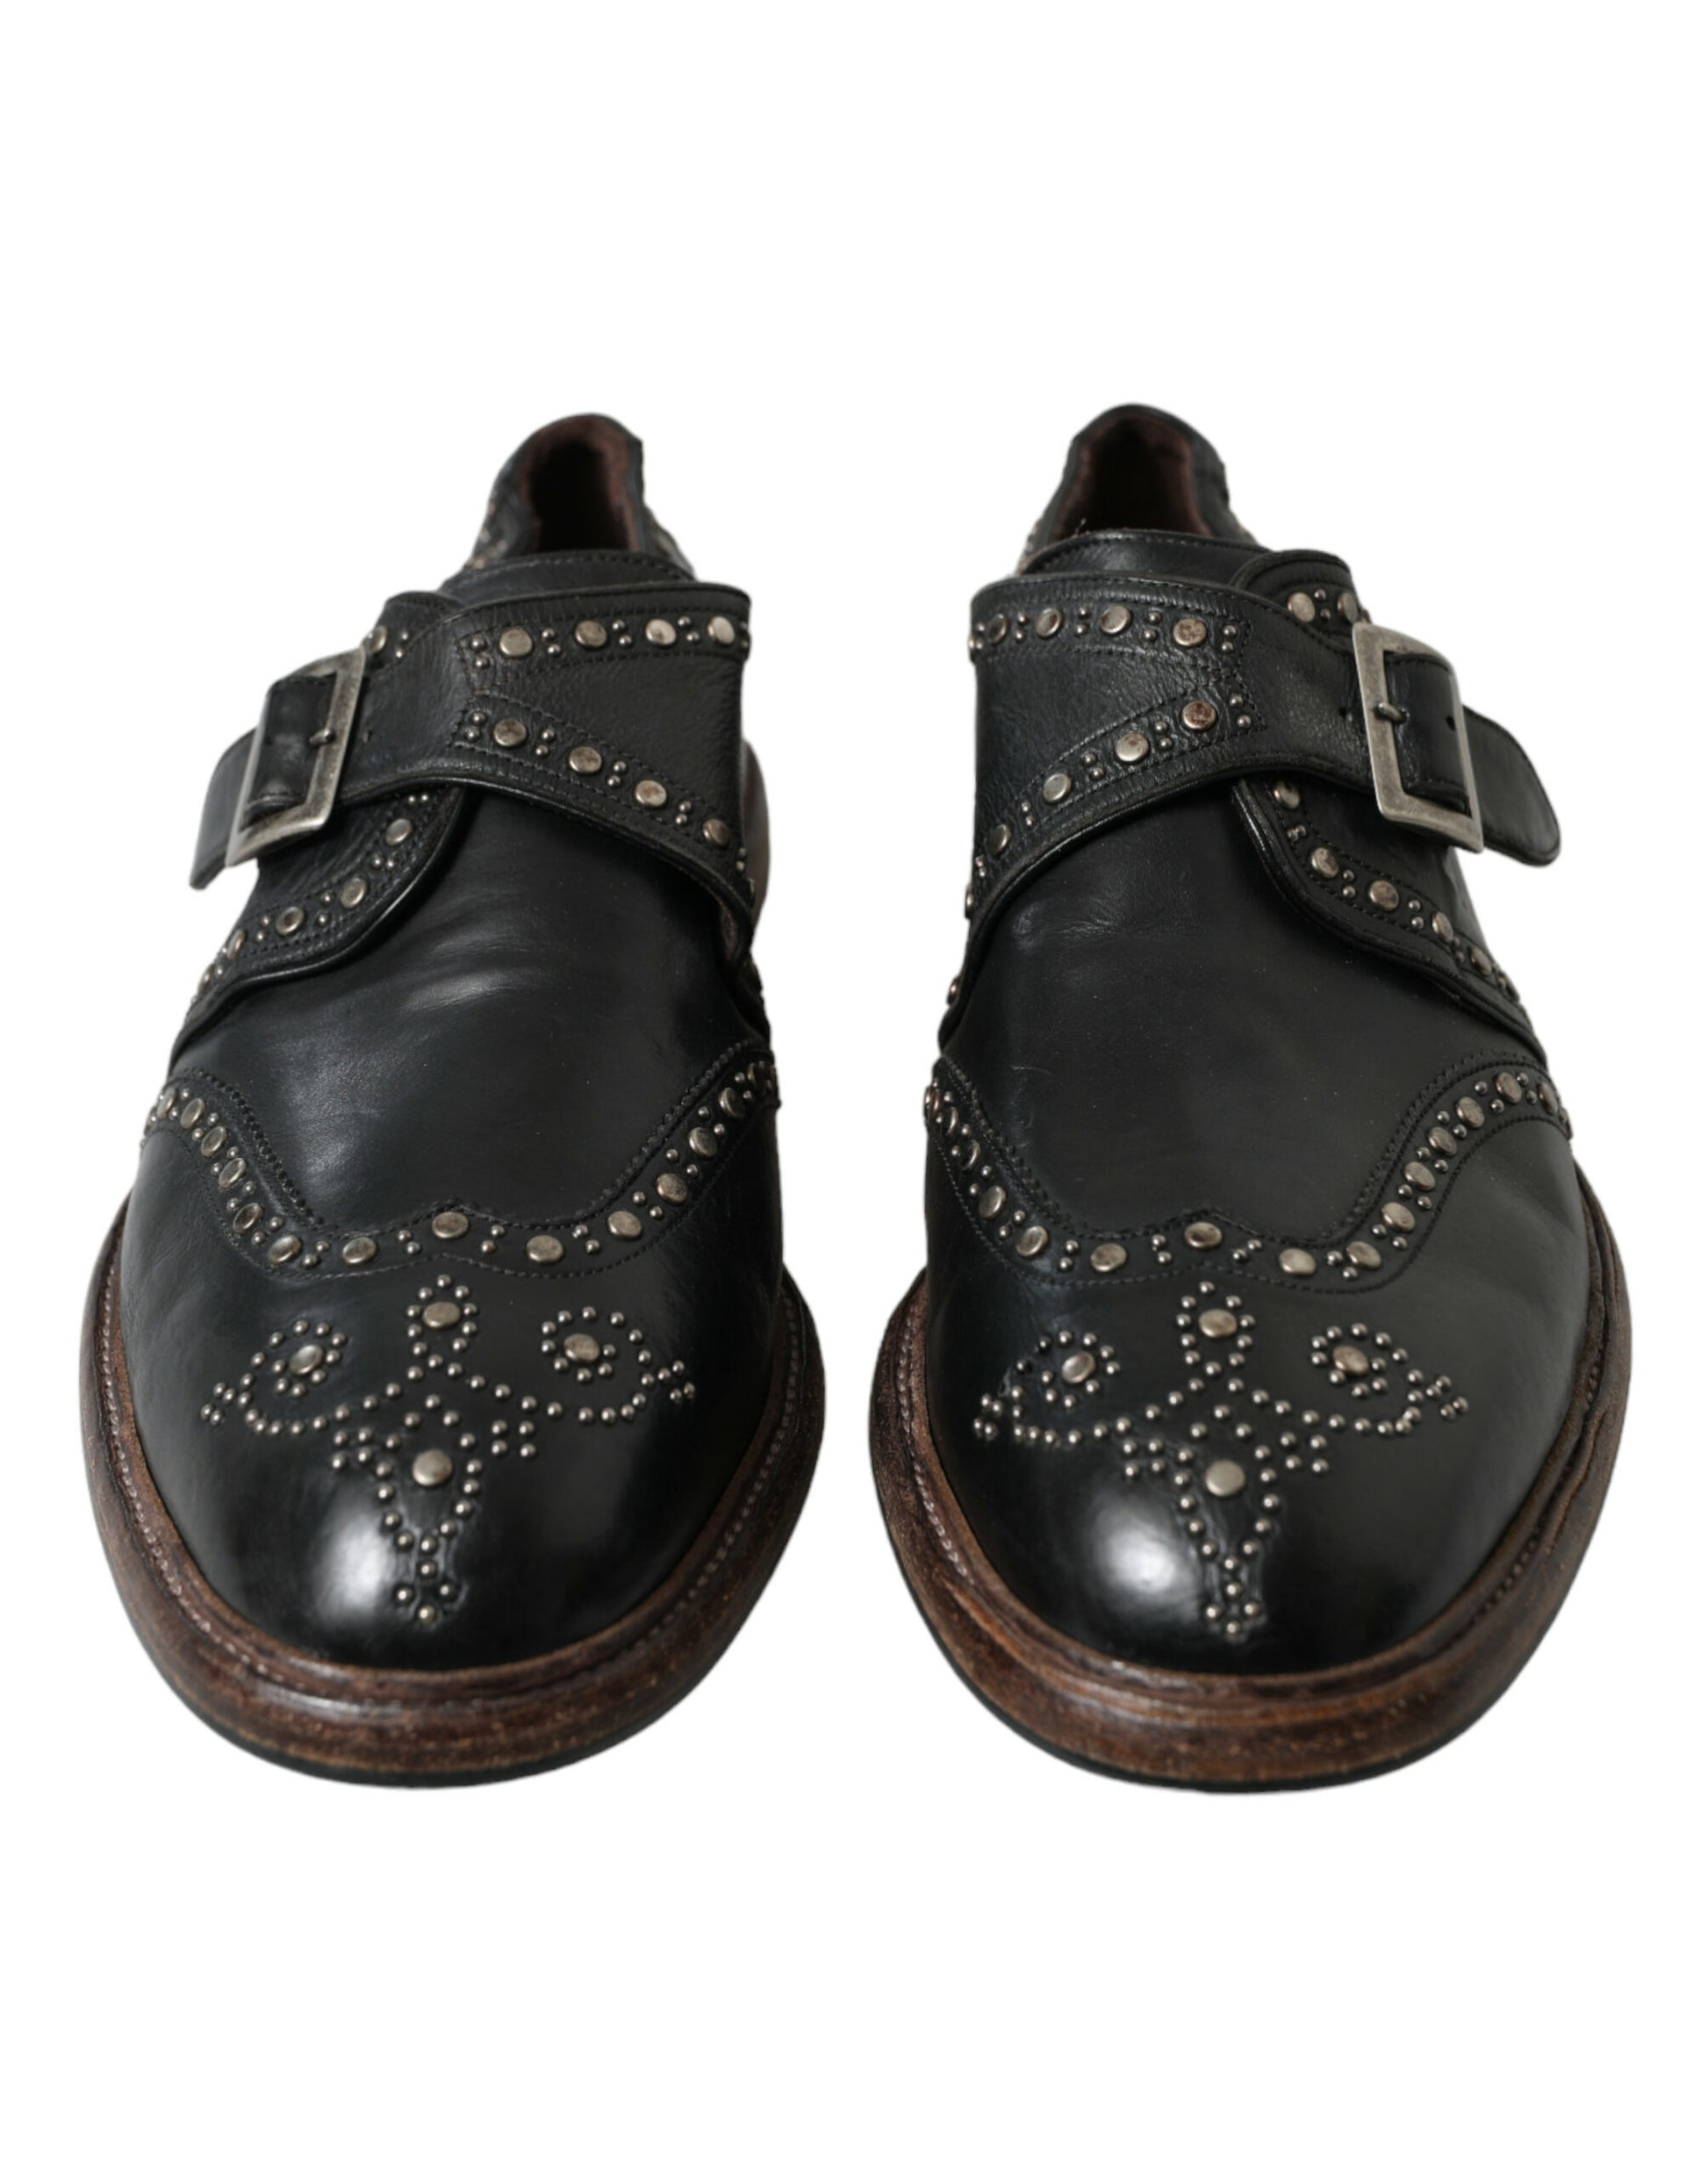 Fashionsarah.com Fashionsarah.com Dolce & Gabbana Black Leather Monk Strap Studded Dress Shoes